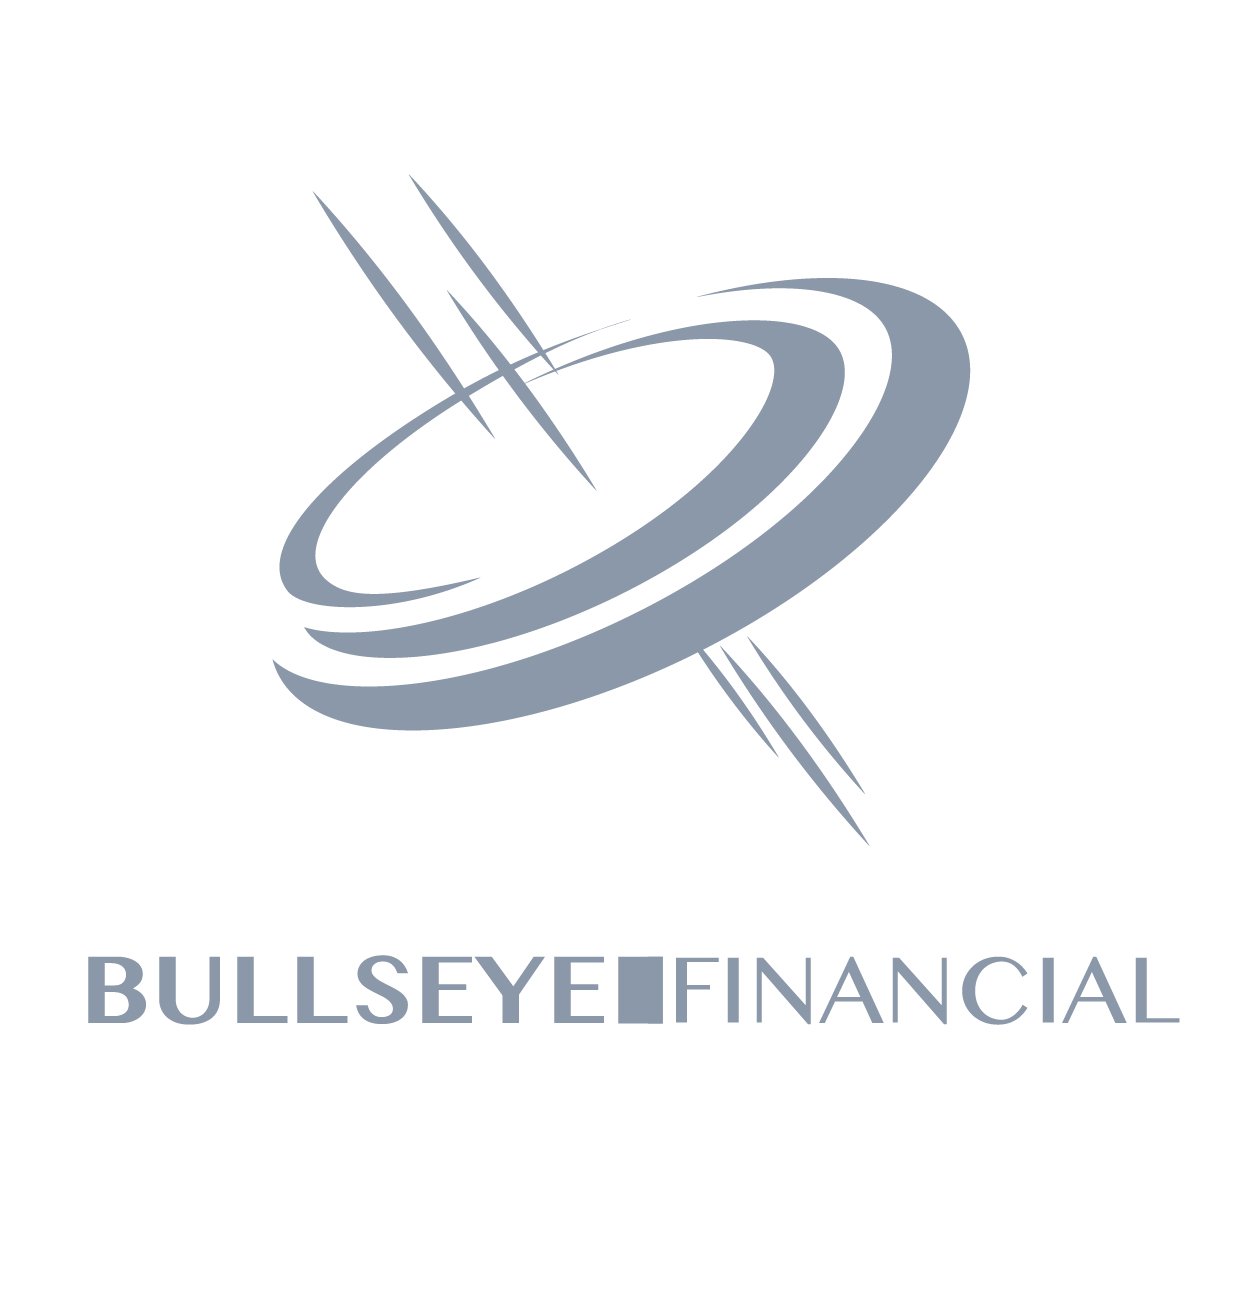 Bullseye Financial